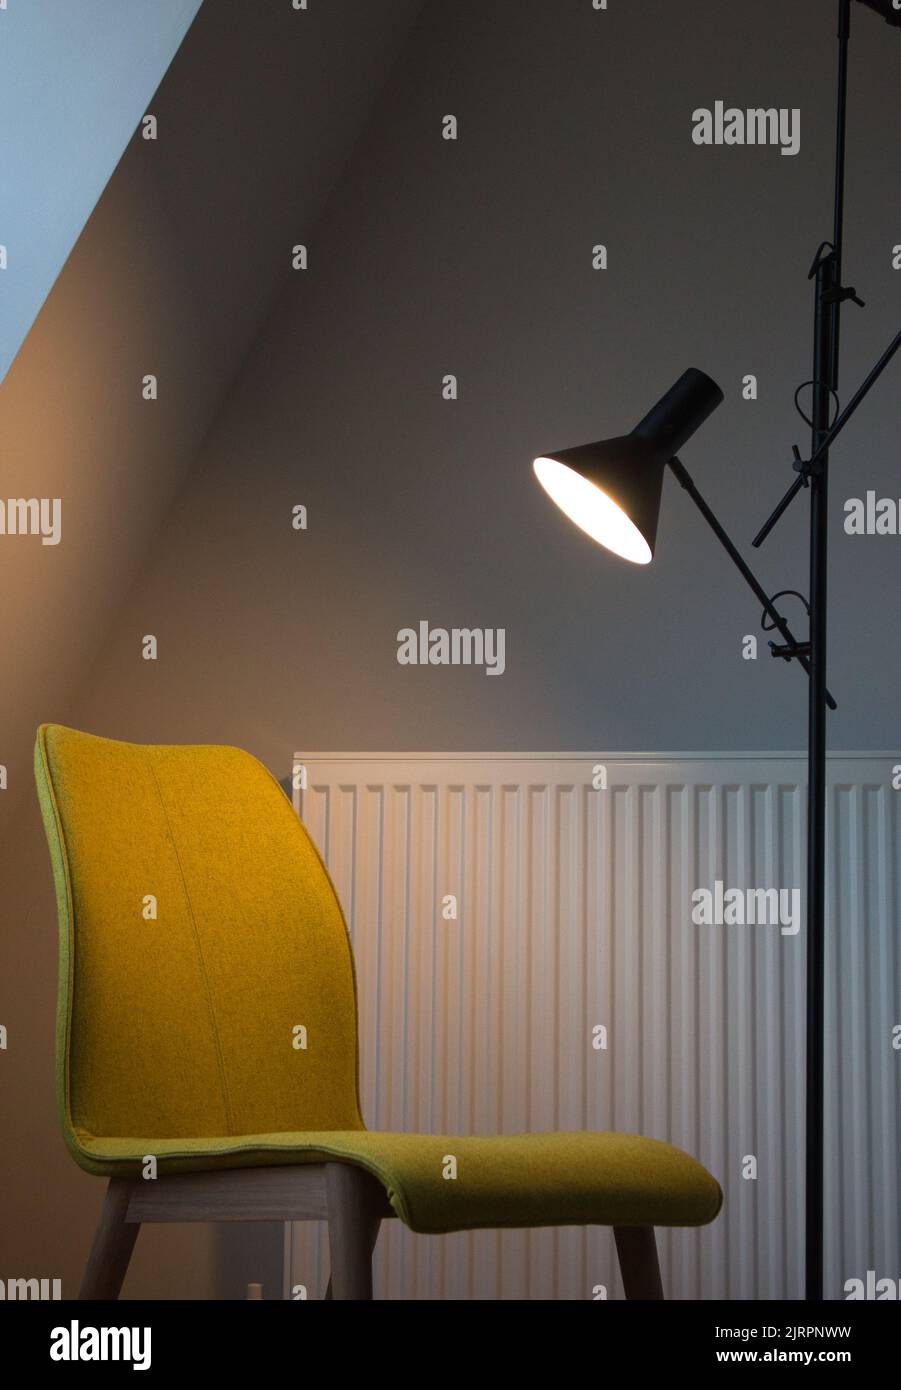 Yellow chair and radiator in lamp spotlight Stock Photo